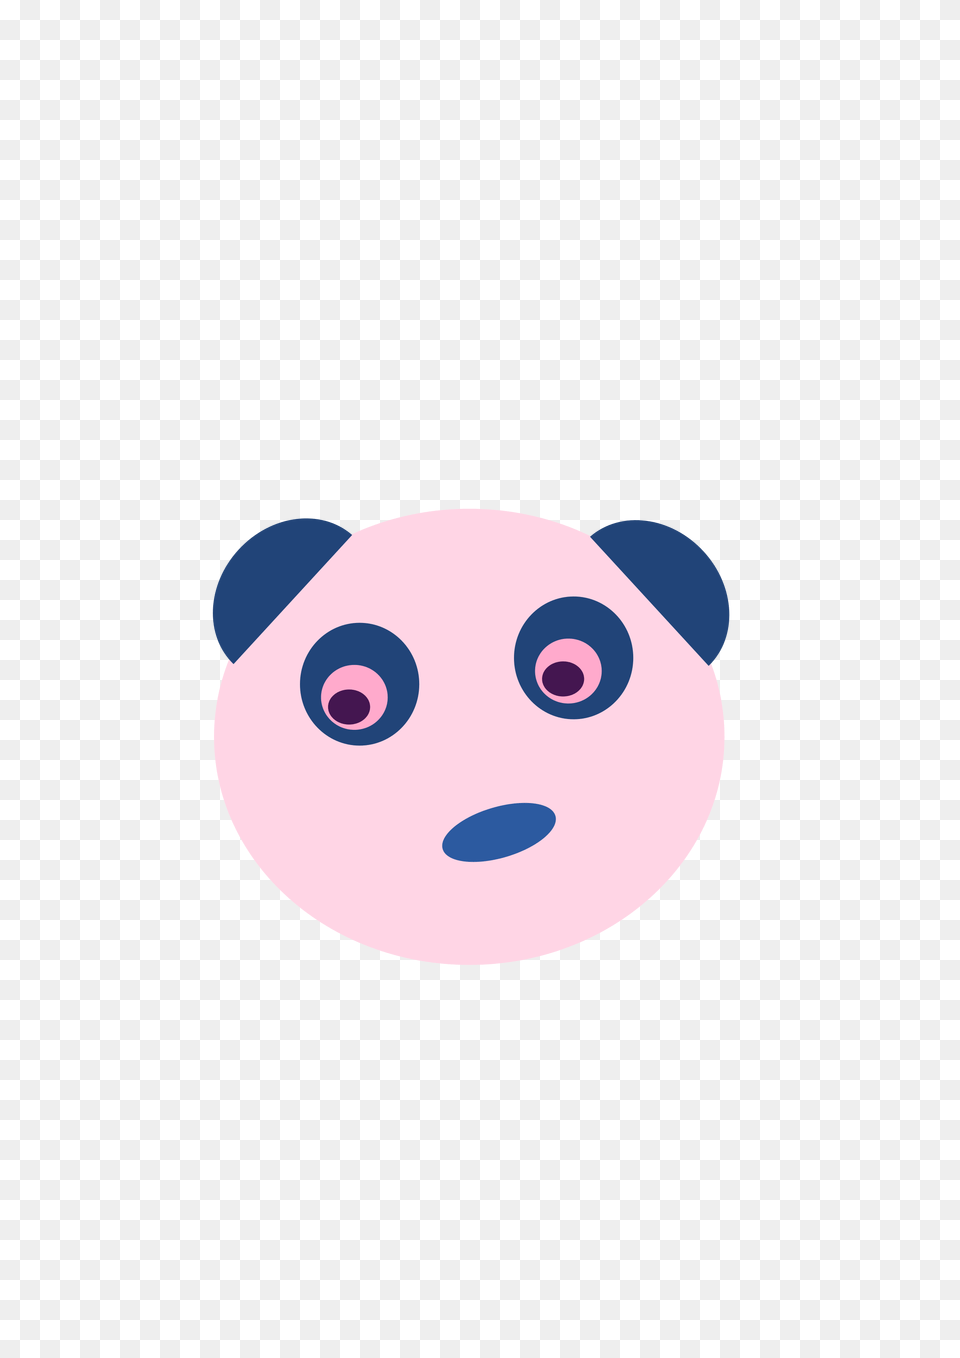 Blue Panda Face Icons Free Transparent Png